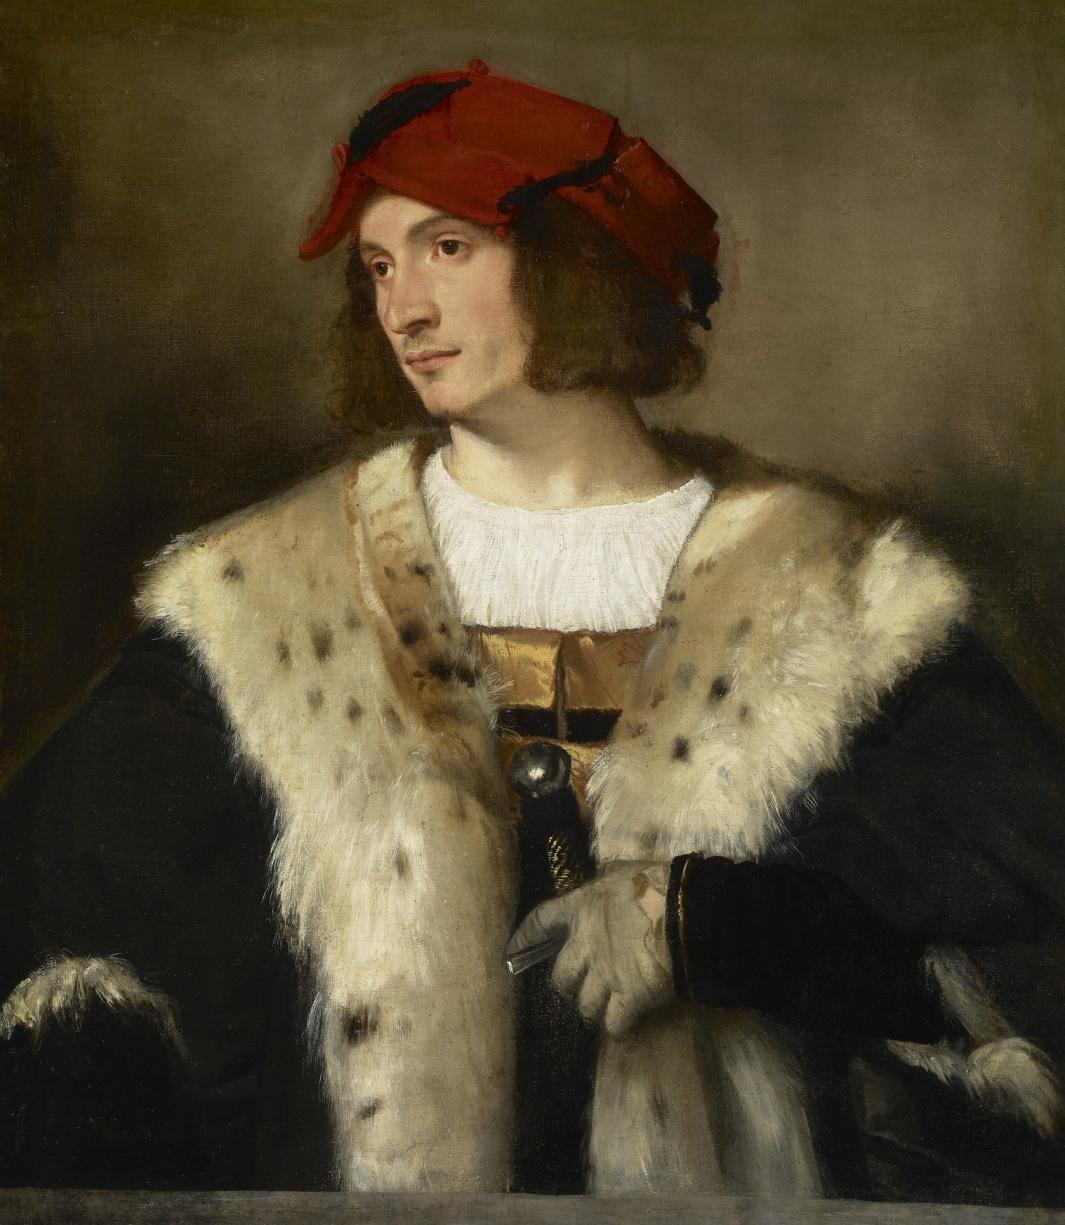 Titien 1510 ca Homme au beret rouge Frick collection